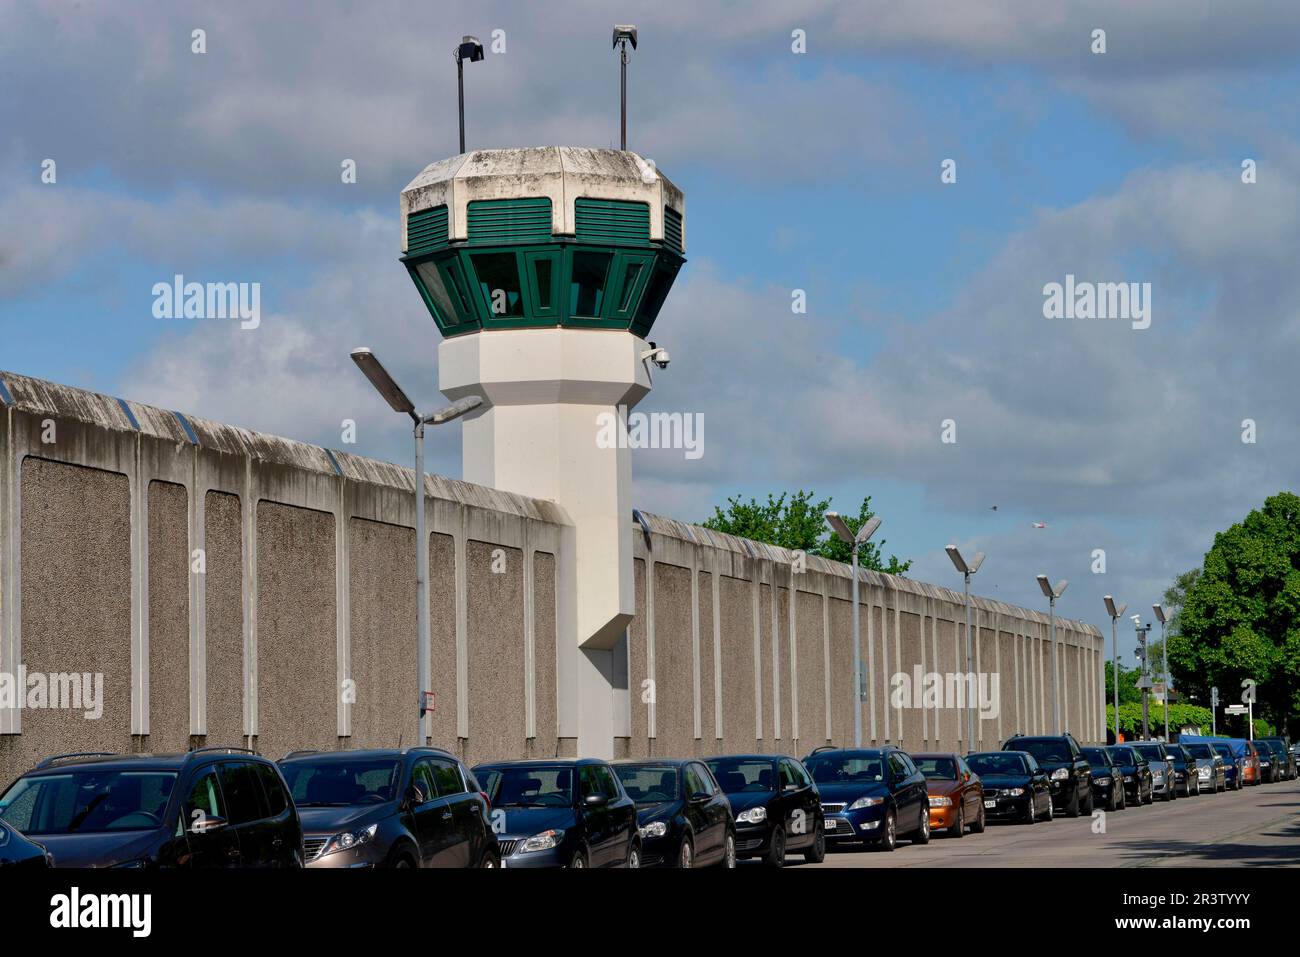 JVA Tegel, Friedrich-Olbricht-Damm, Tegel, Berlin, Germany, correctional facility Stock Photo